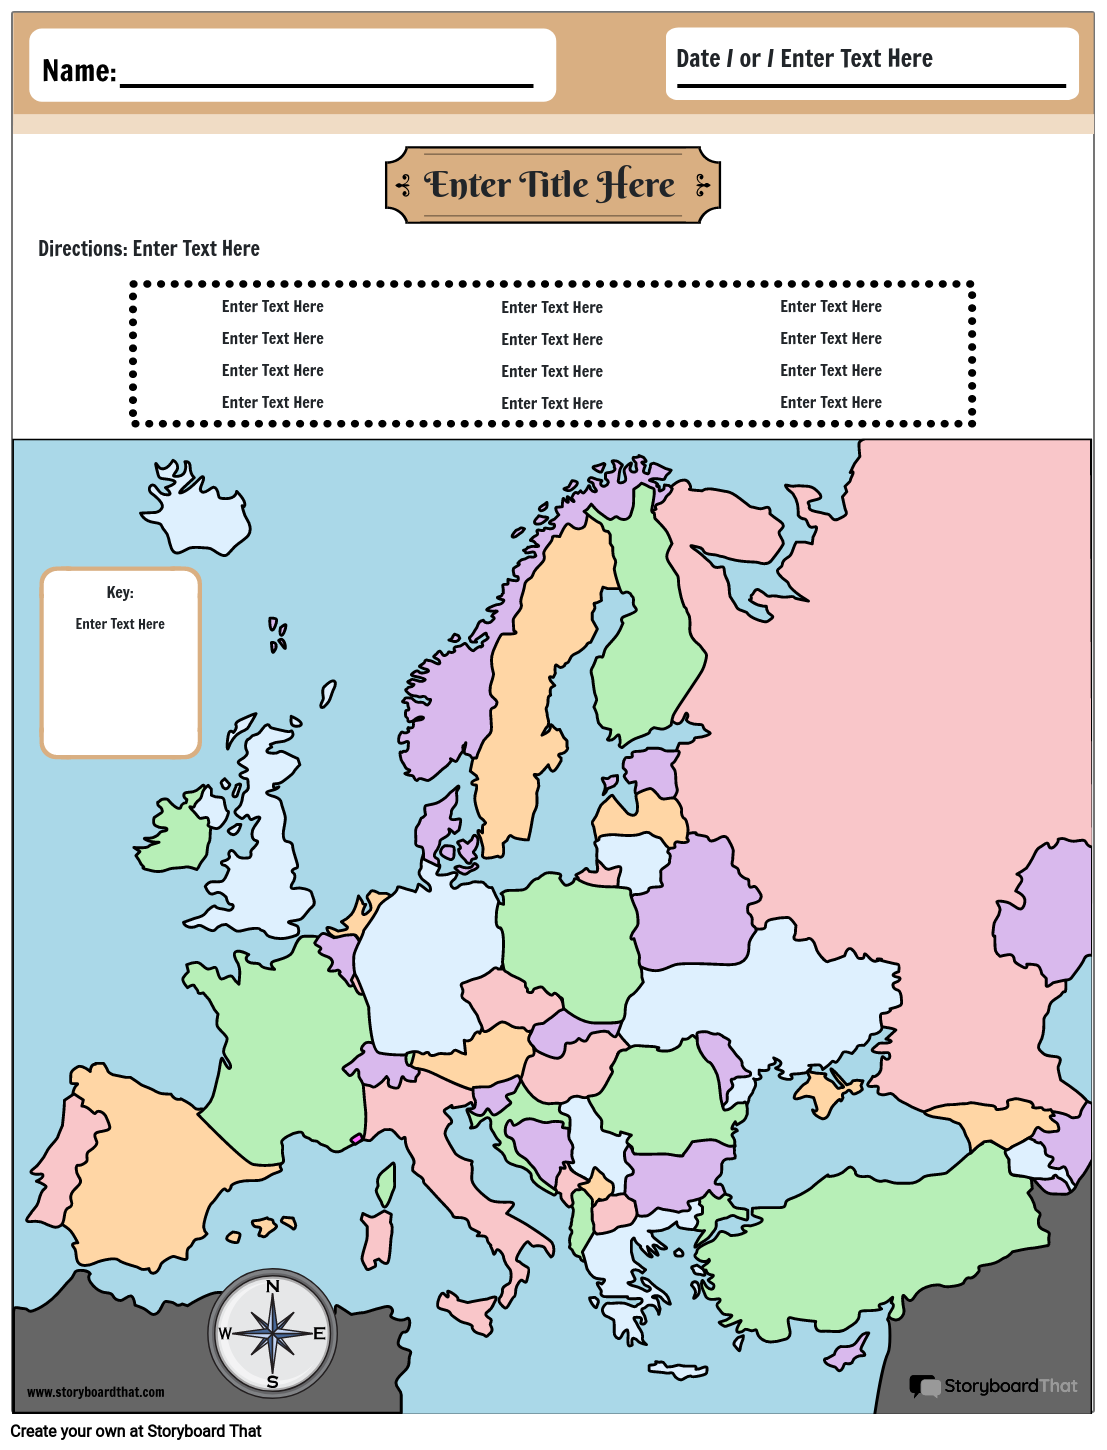 Euroopan Kartta